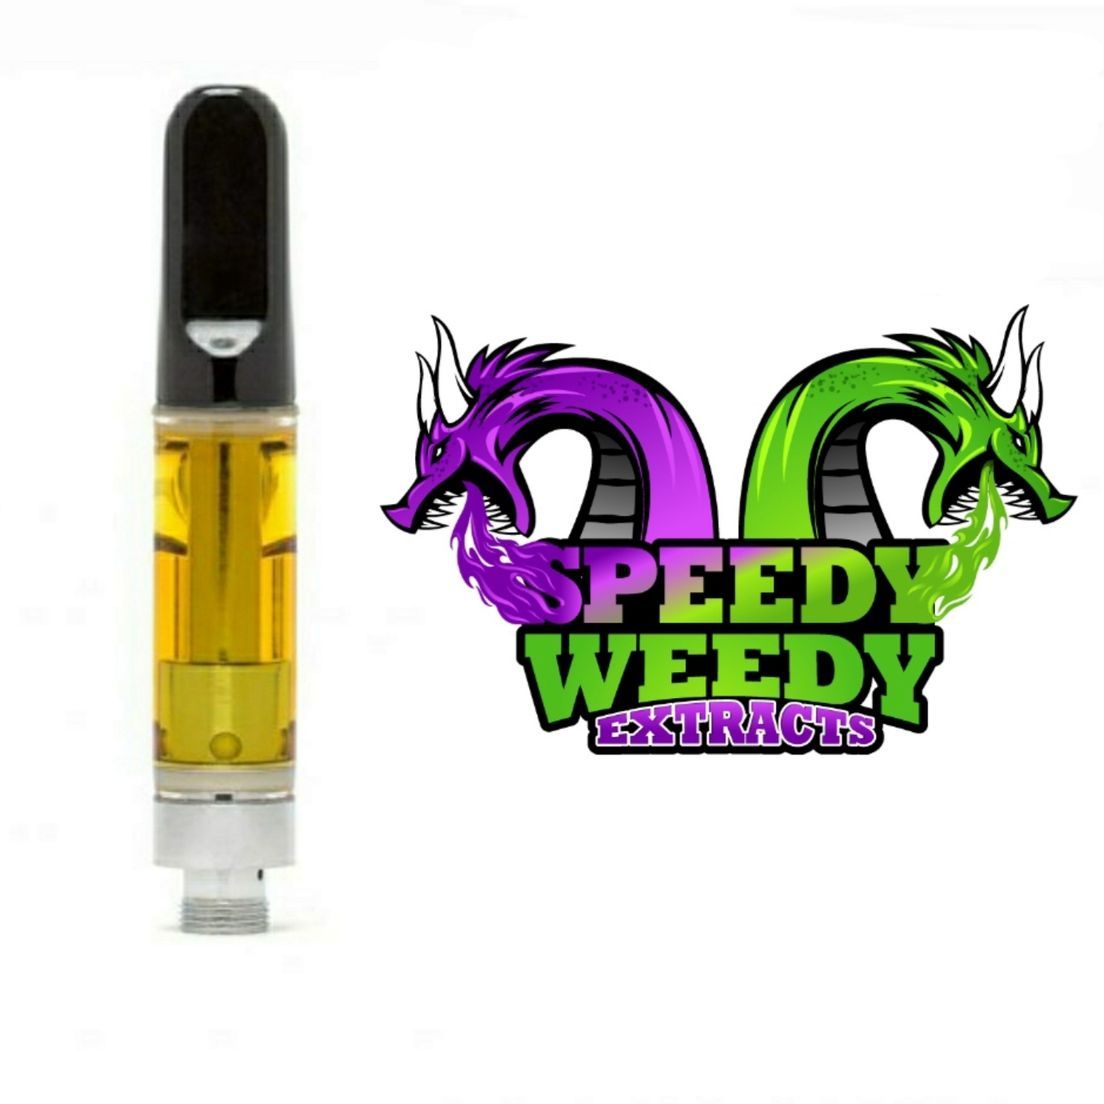 1. Speedy Weedy 1g Cartridge - Cereal Milk